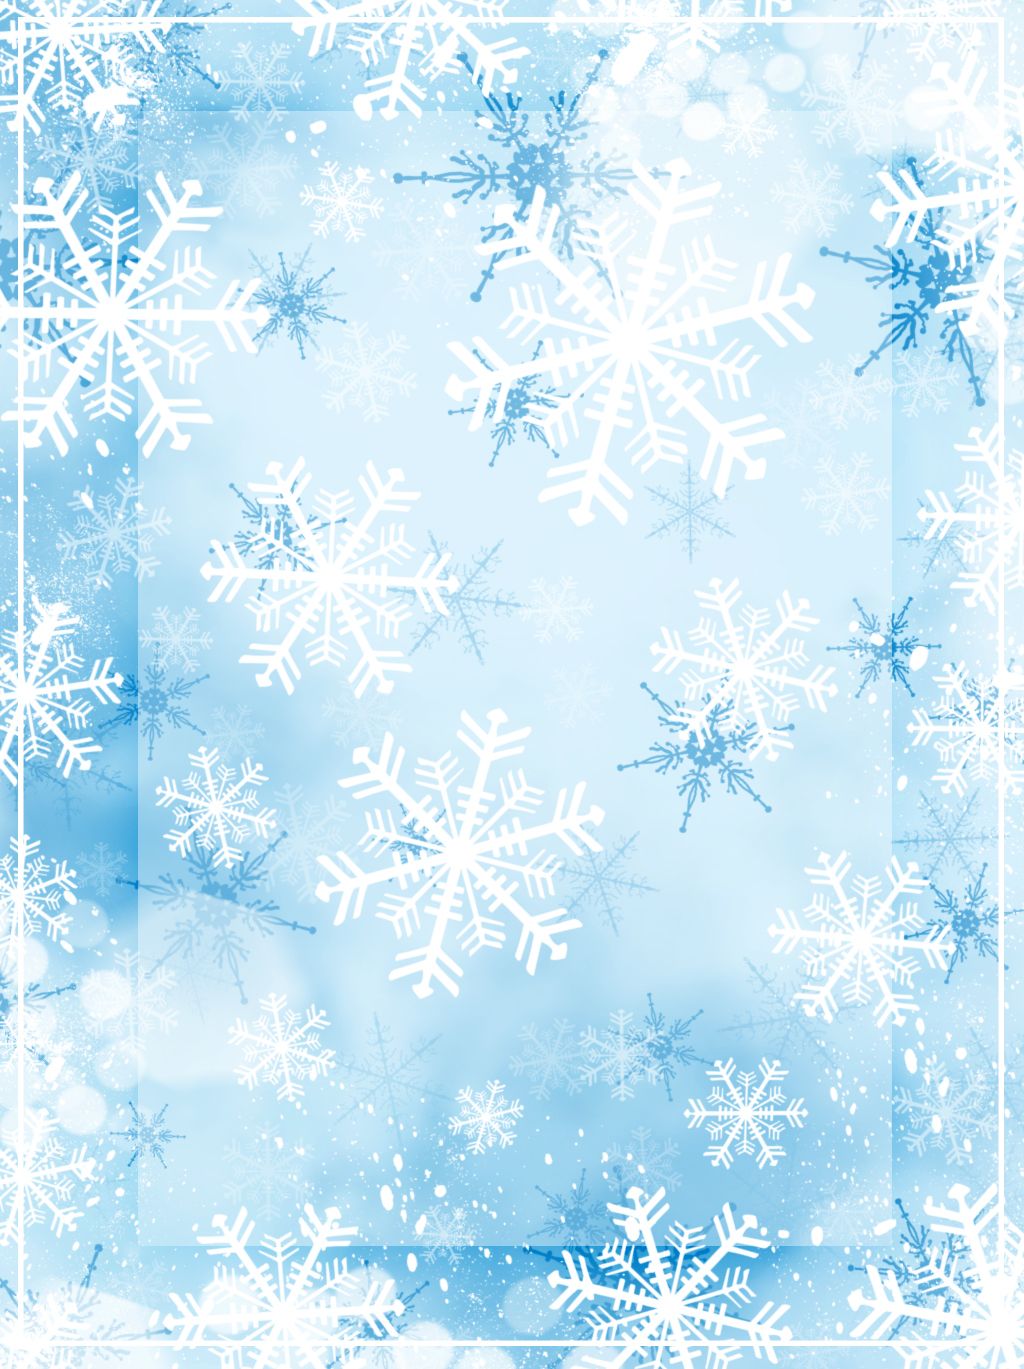 Fully Beautiful Snowflake Background